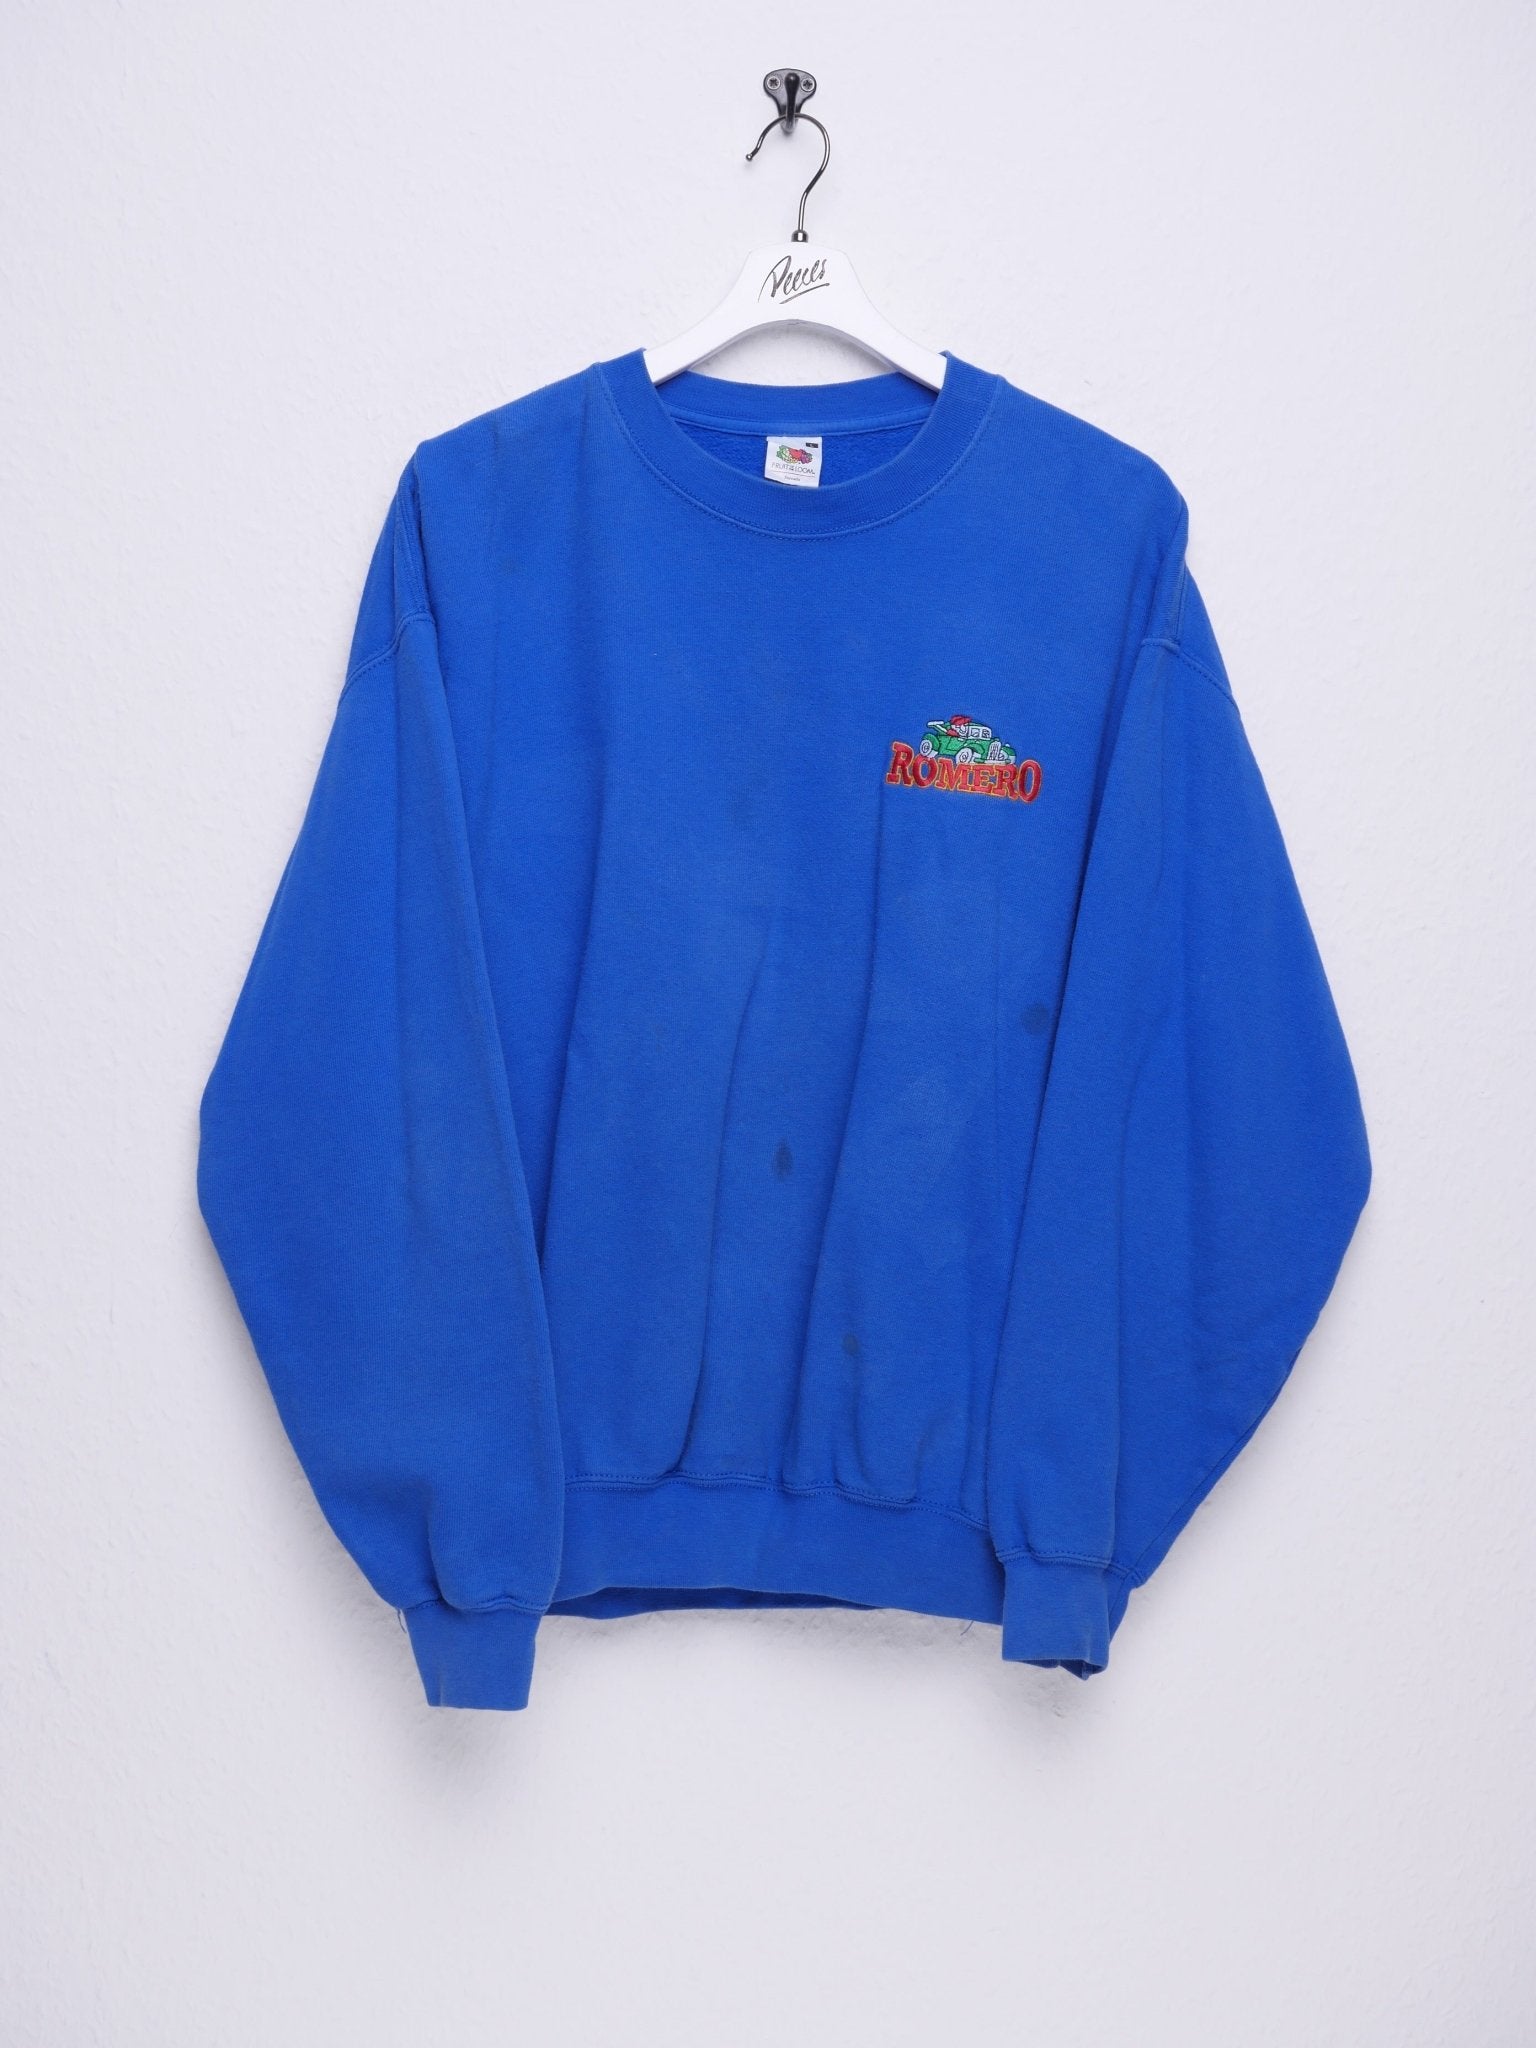 embroidered Romero blue Sweater - Peeces